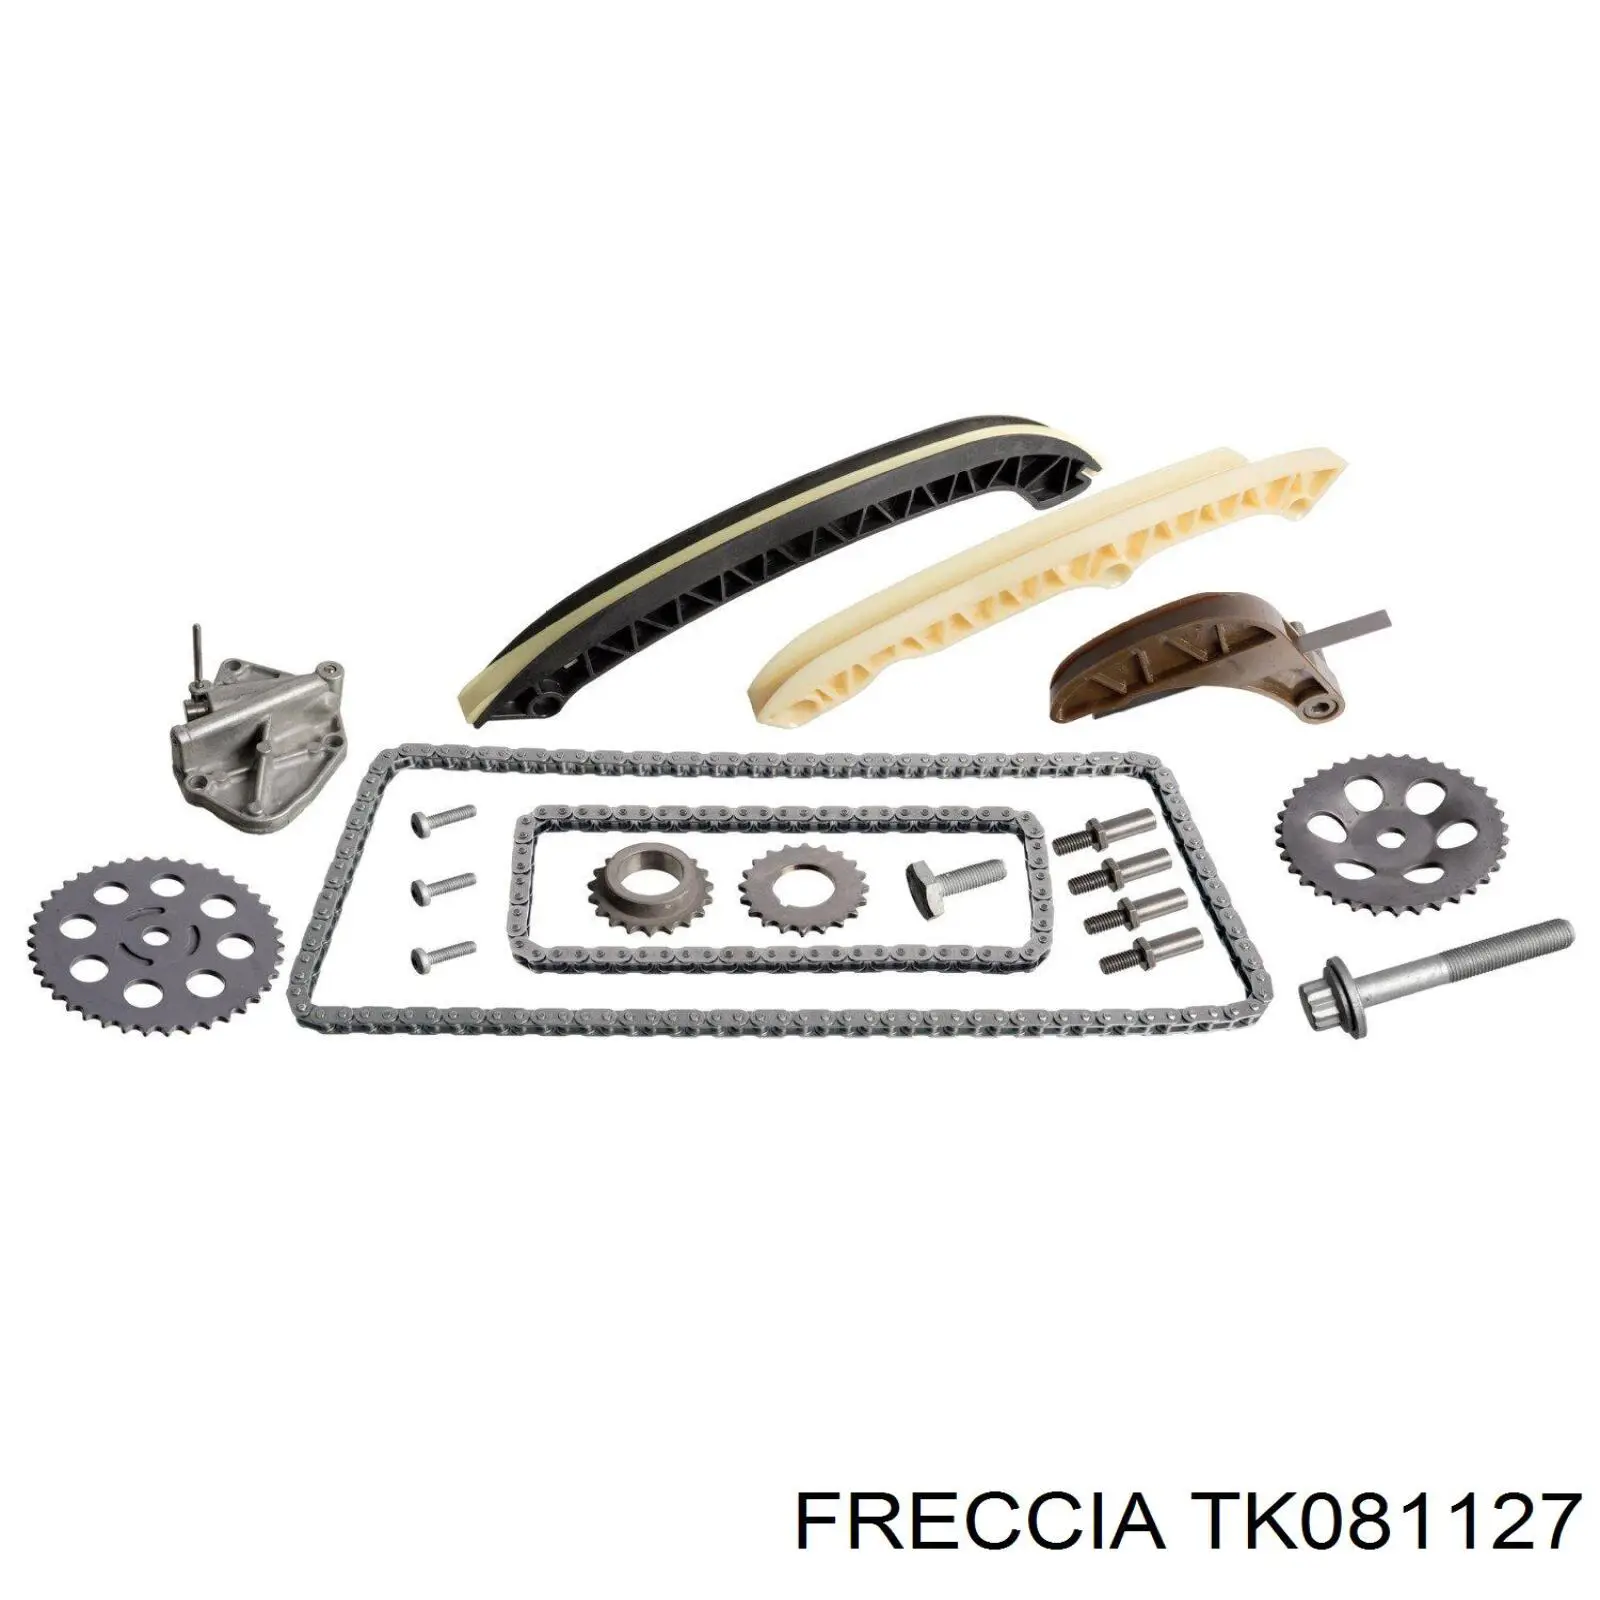 TK08-1127 Freccia комплект цепи грм